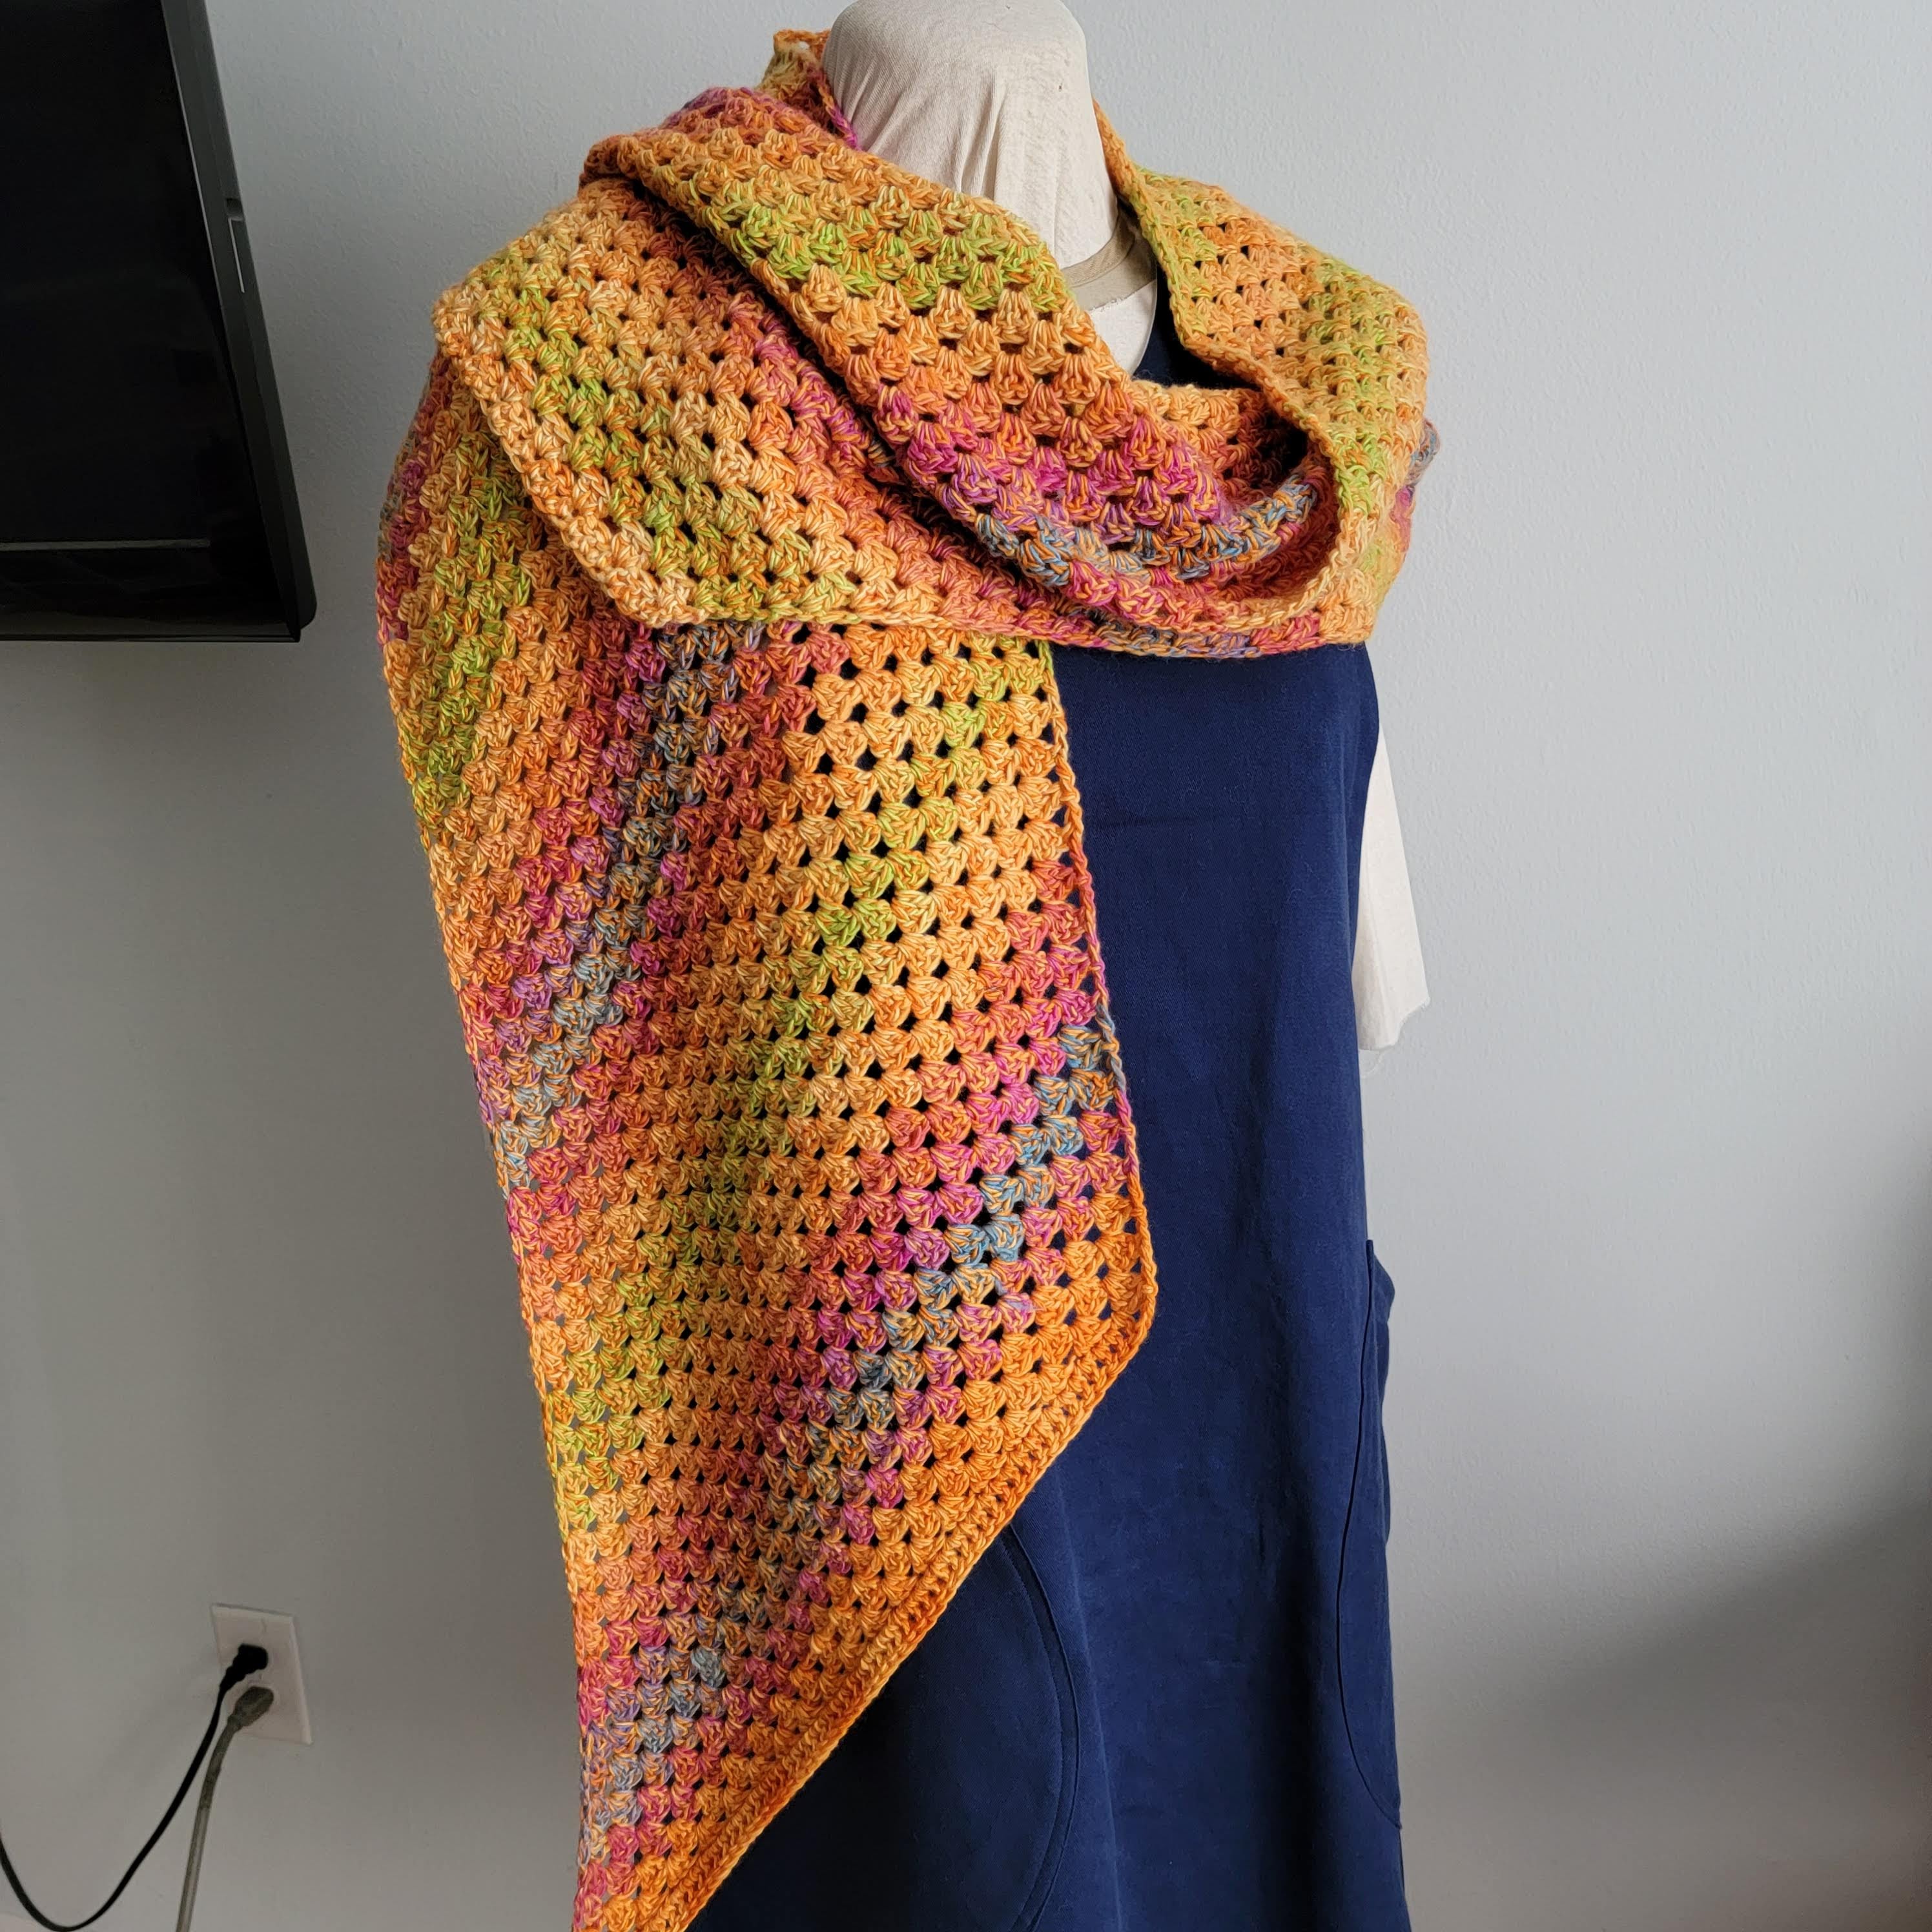 Knit Picks options Wood Interchangeable Knitting Needle Set - US 4-11 (Rainbow)